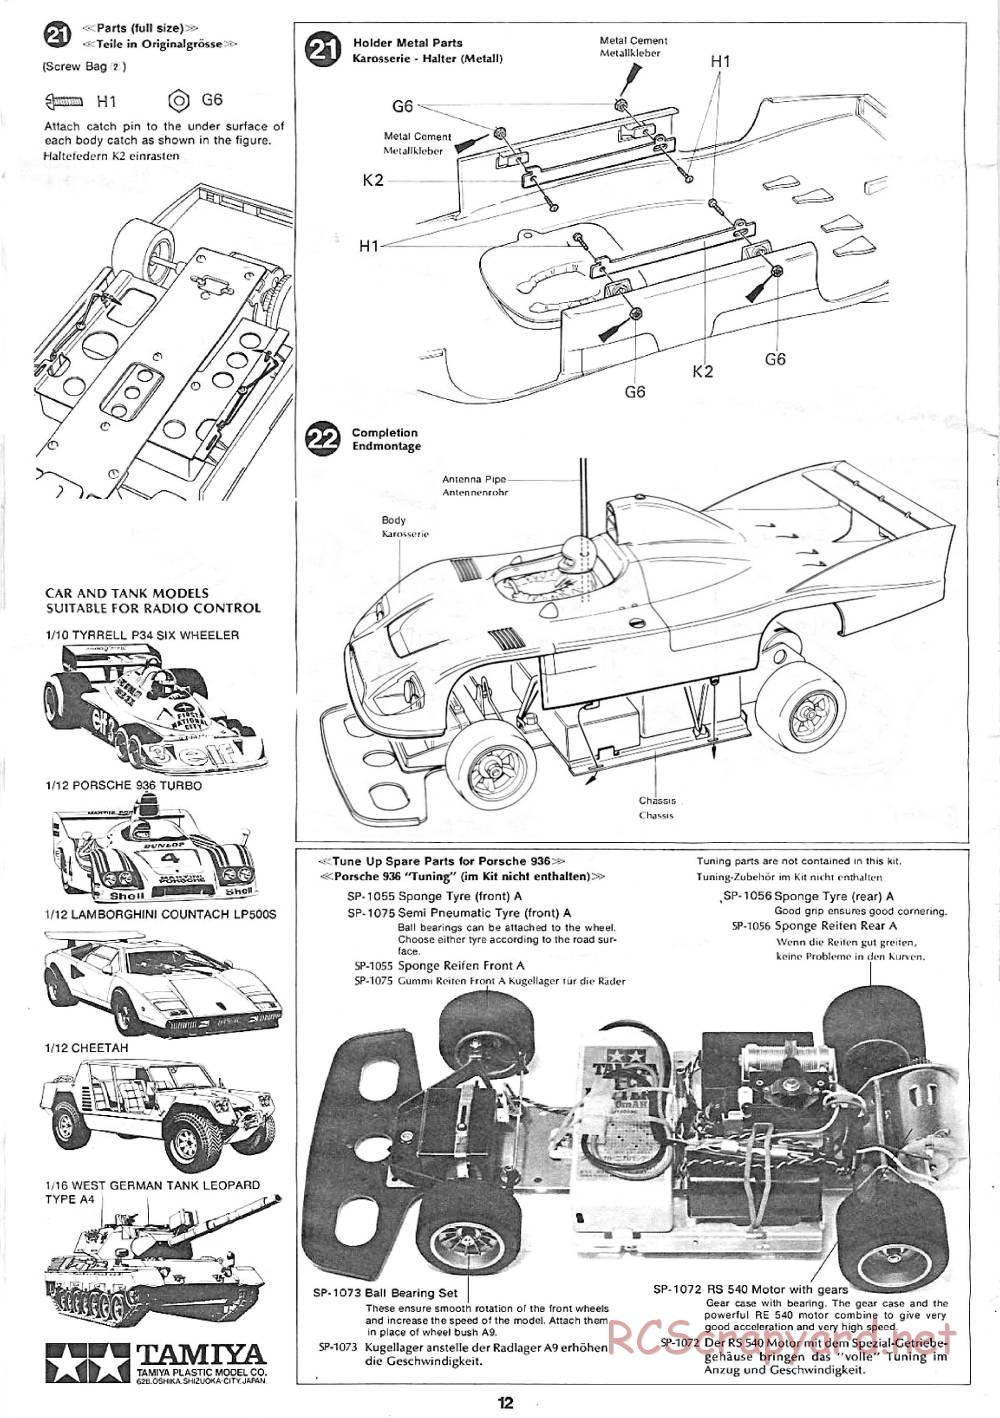 Tamiya - Martini Porsche 936 Turbo - 58006 - Manual - Page 12